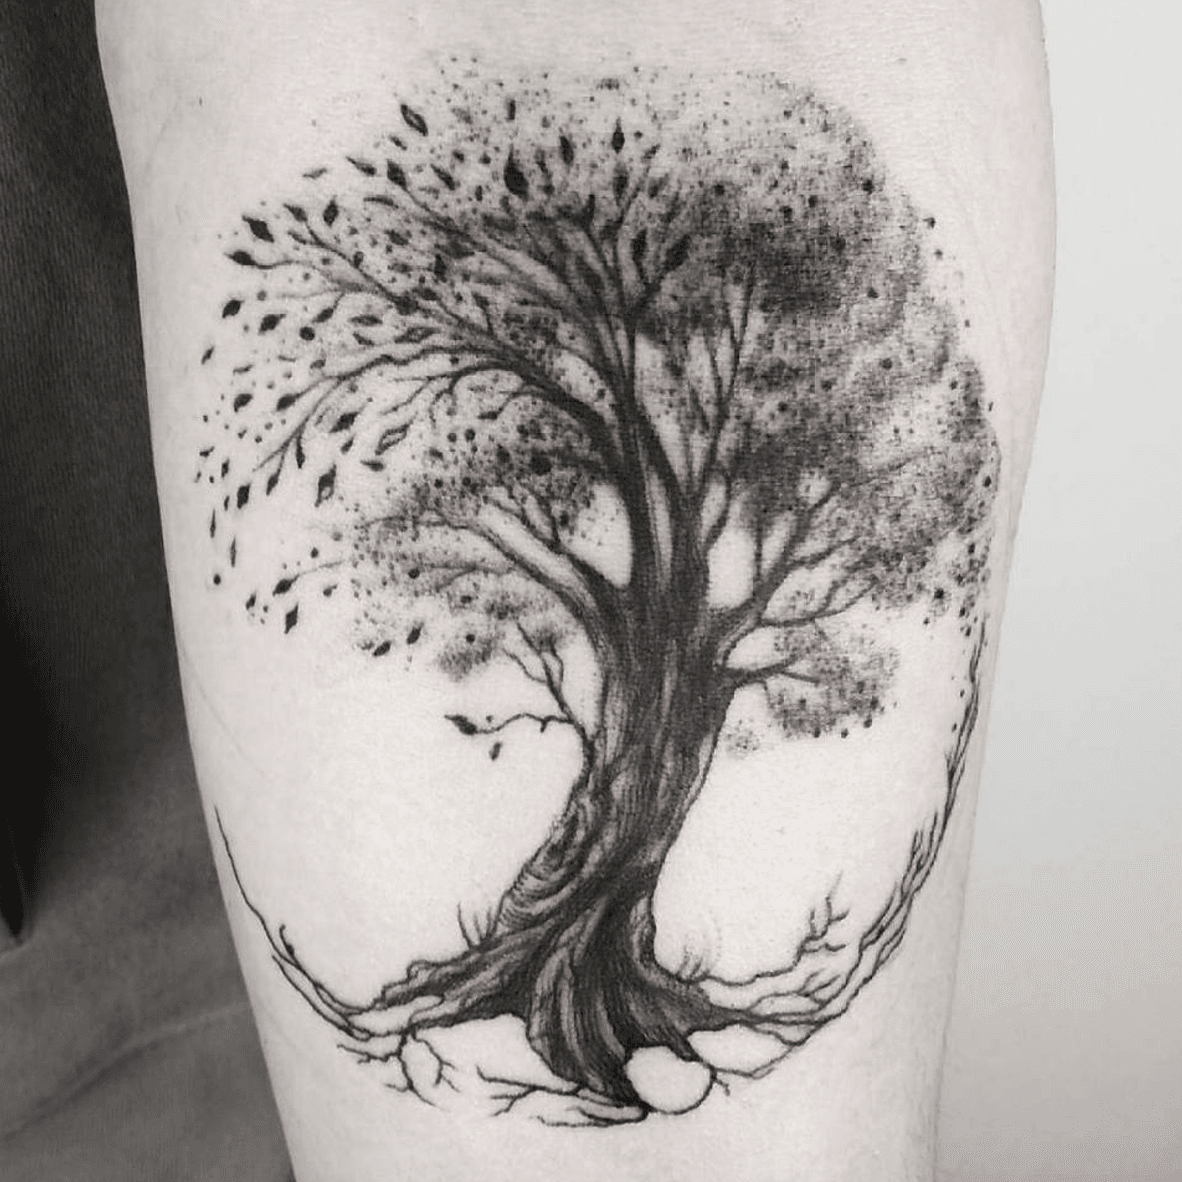 Tattoo tagged with br dots leg mountain landscape tree circle   inkedappcom